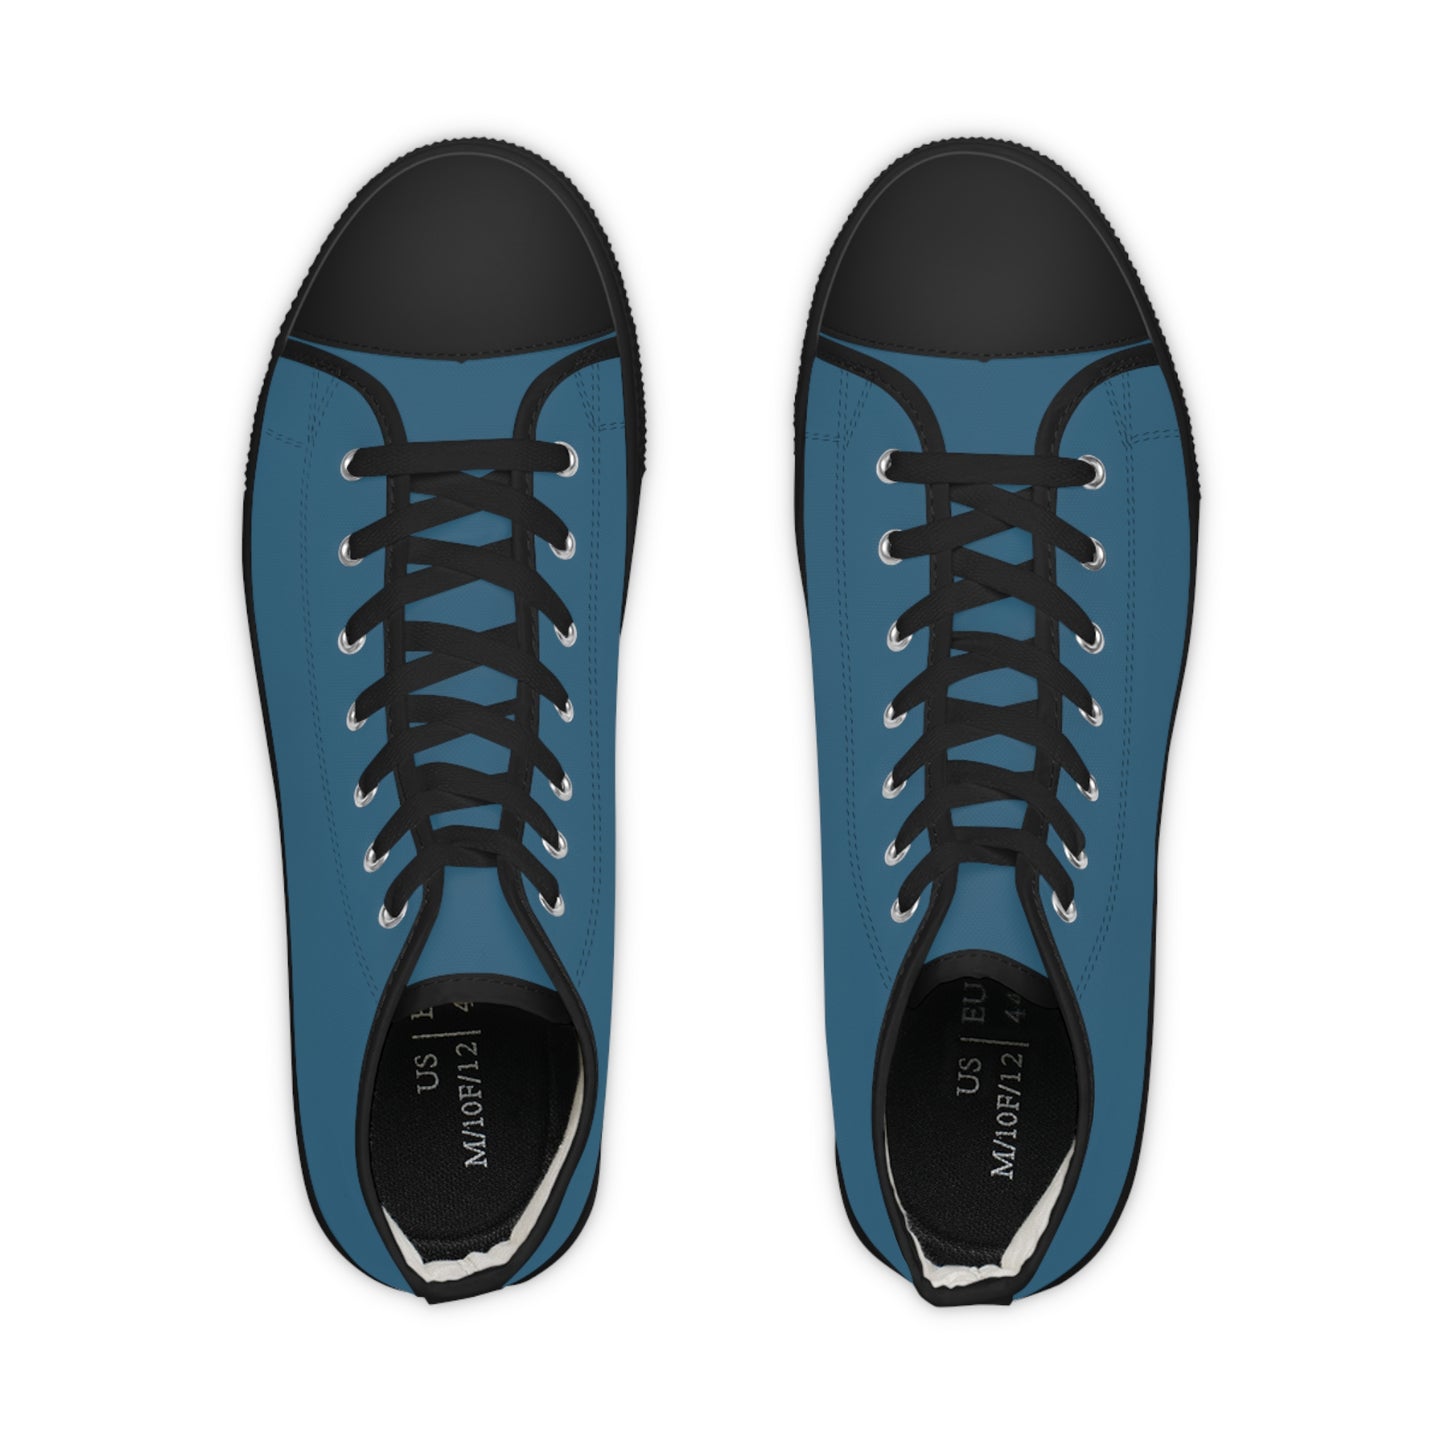 Men's High Top Sneakers - Dark Blue US 14 White sole